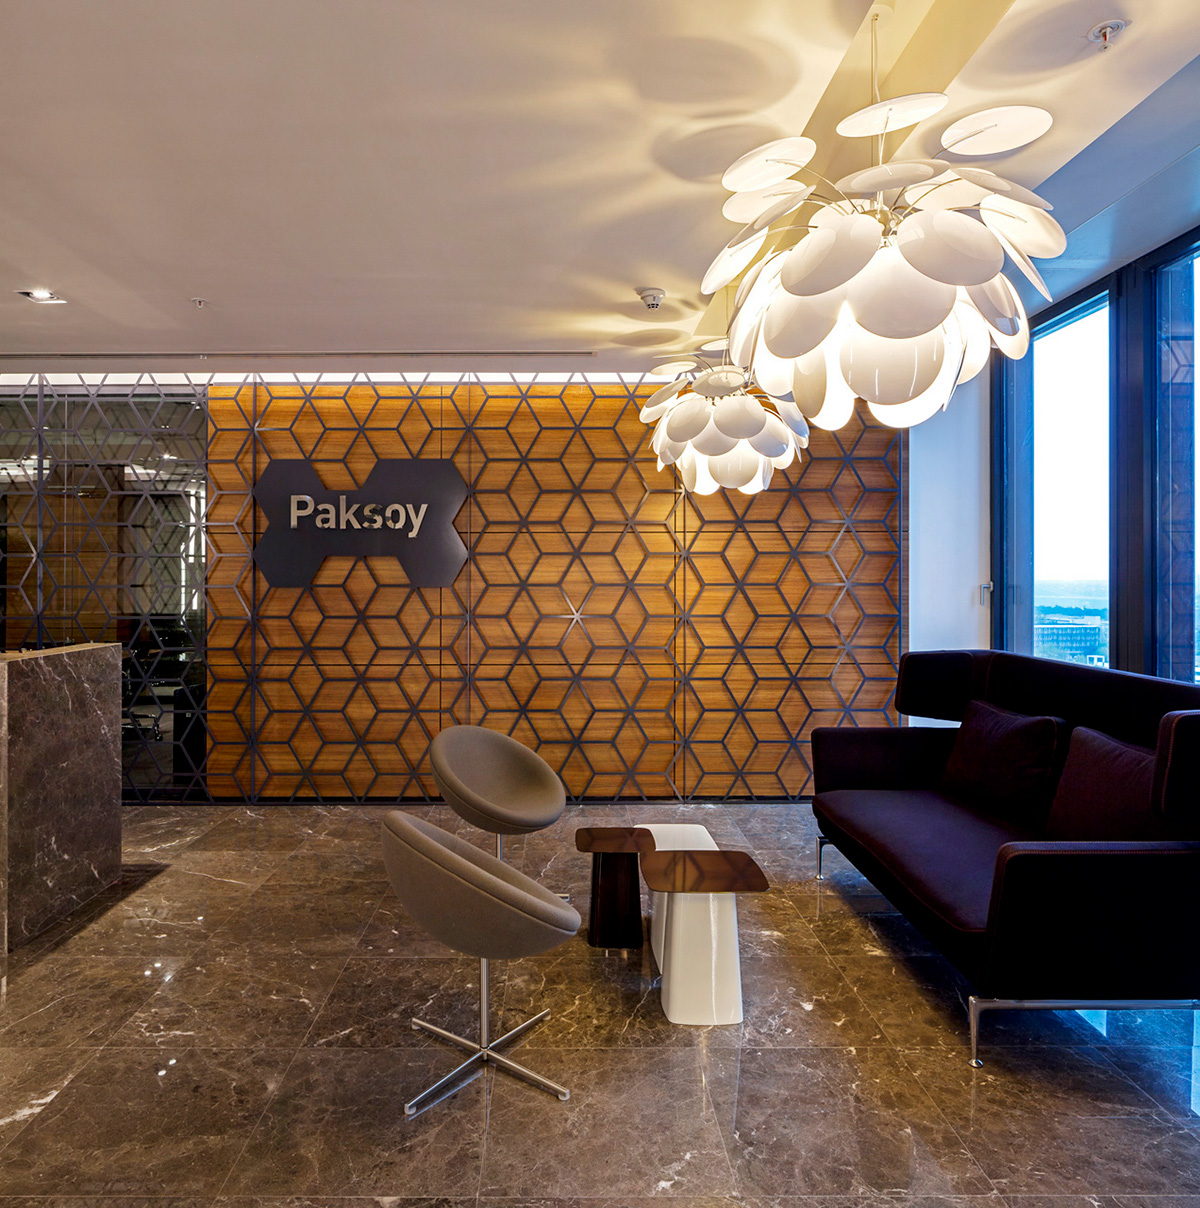 paksoy law Office Interior indoor furniture lighting architectural sahirugureren istanbul maslak